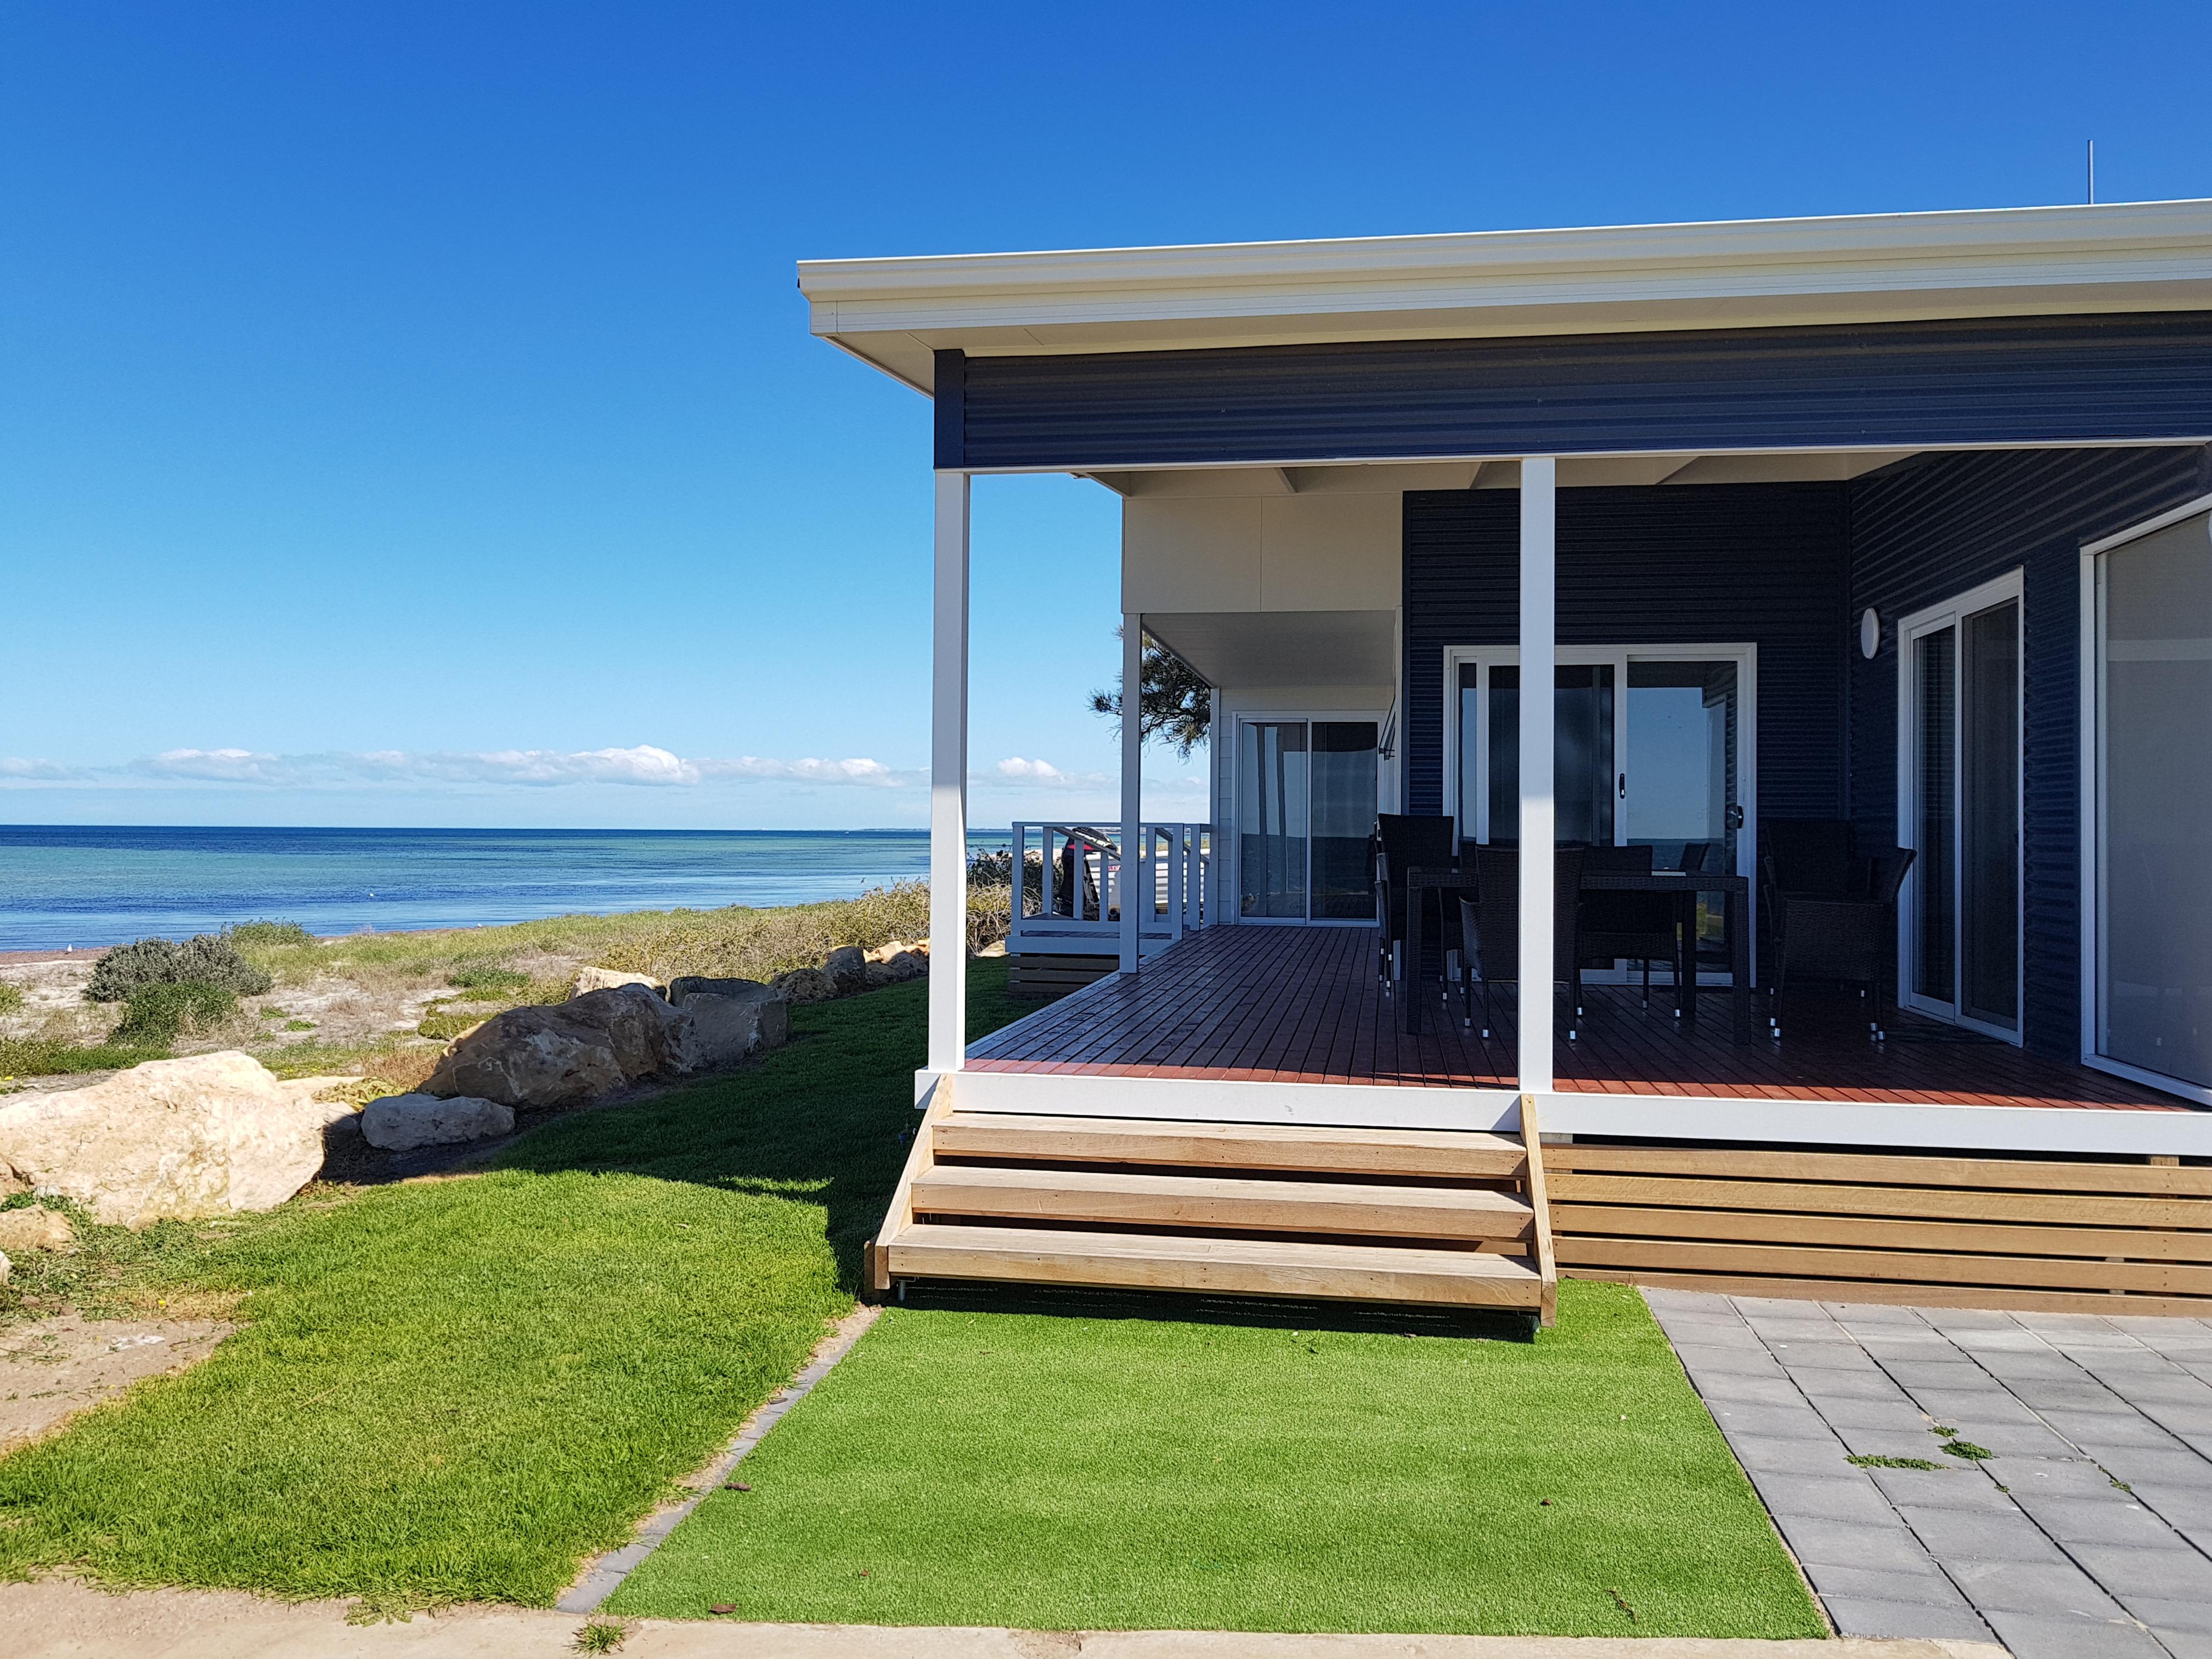 Coastal Living by Design Port Adelaide 0409 757 252